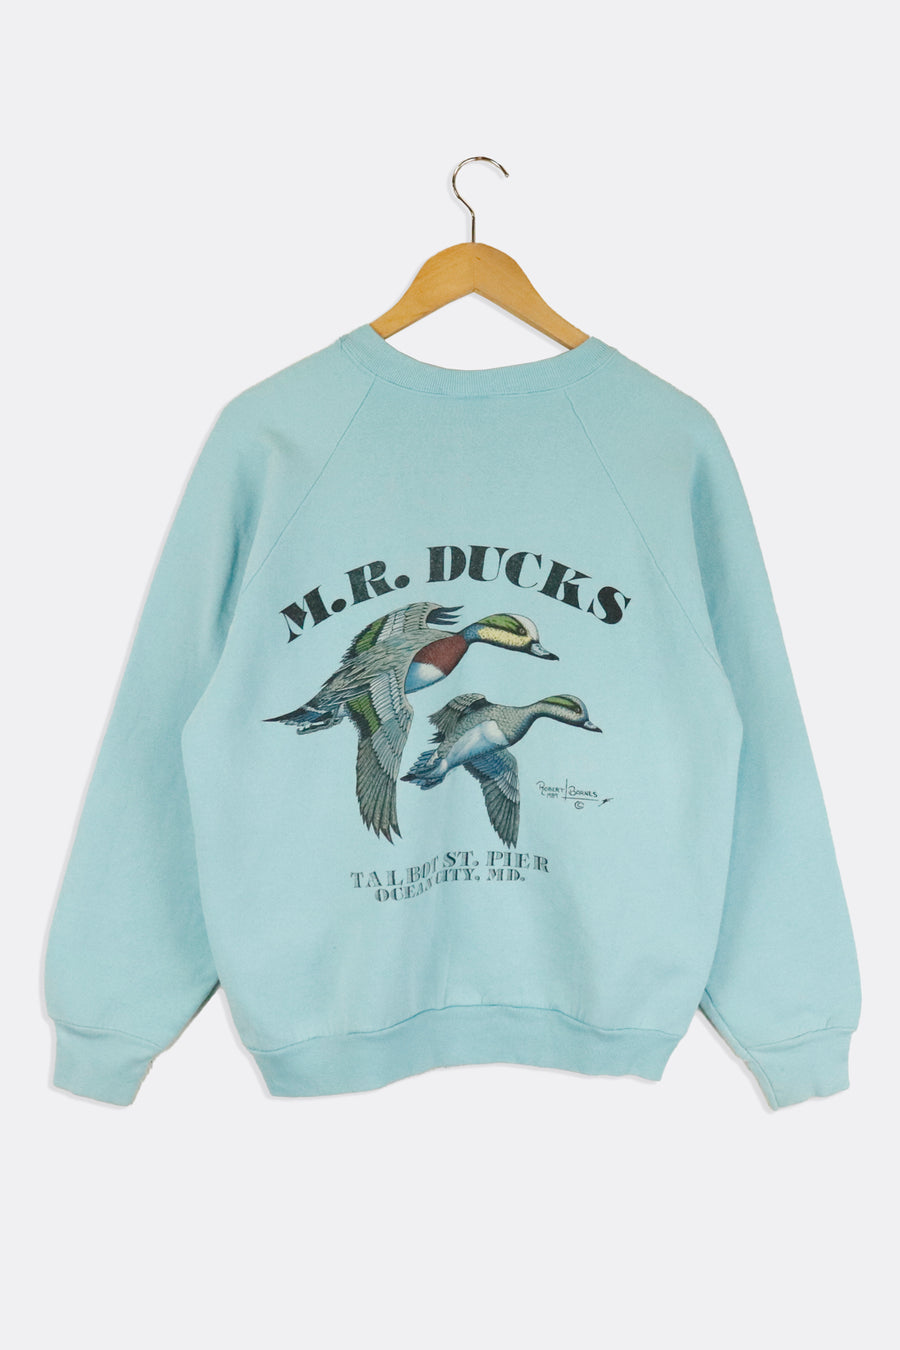 Vintage 1989 Mr Ducks Two Ducks Flying Painting Style Graphic Sweatshirt Sz L